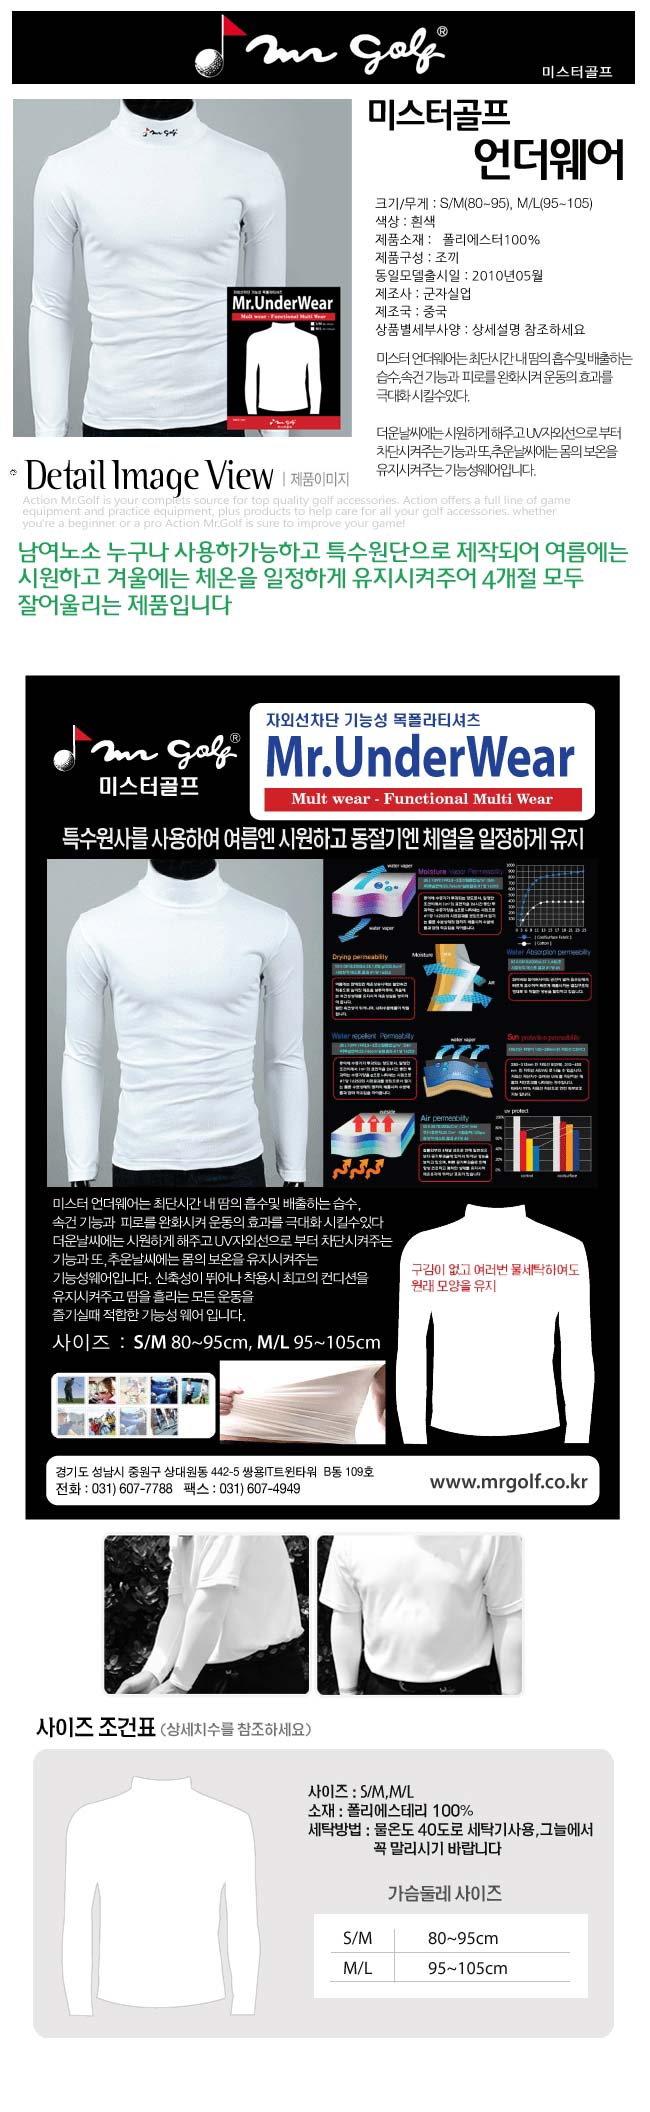 GJS_underwear.jpg